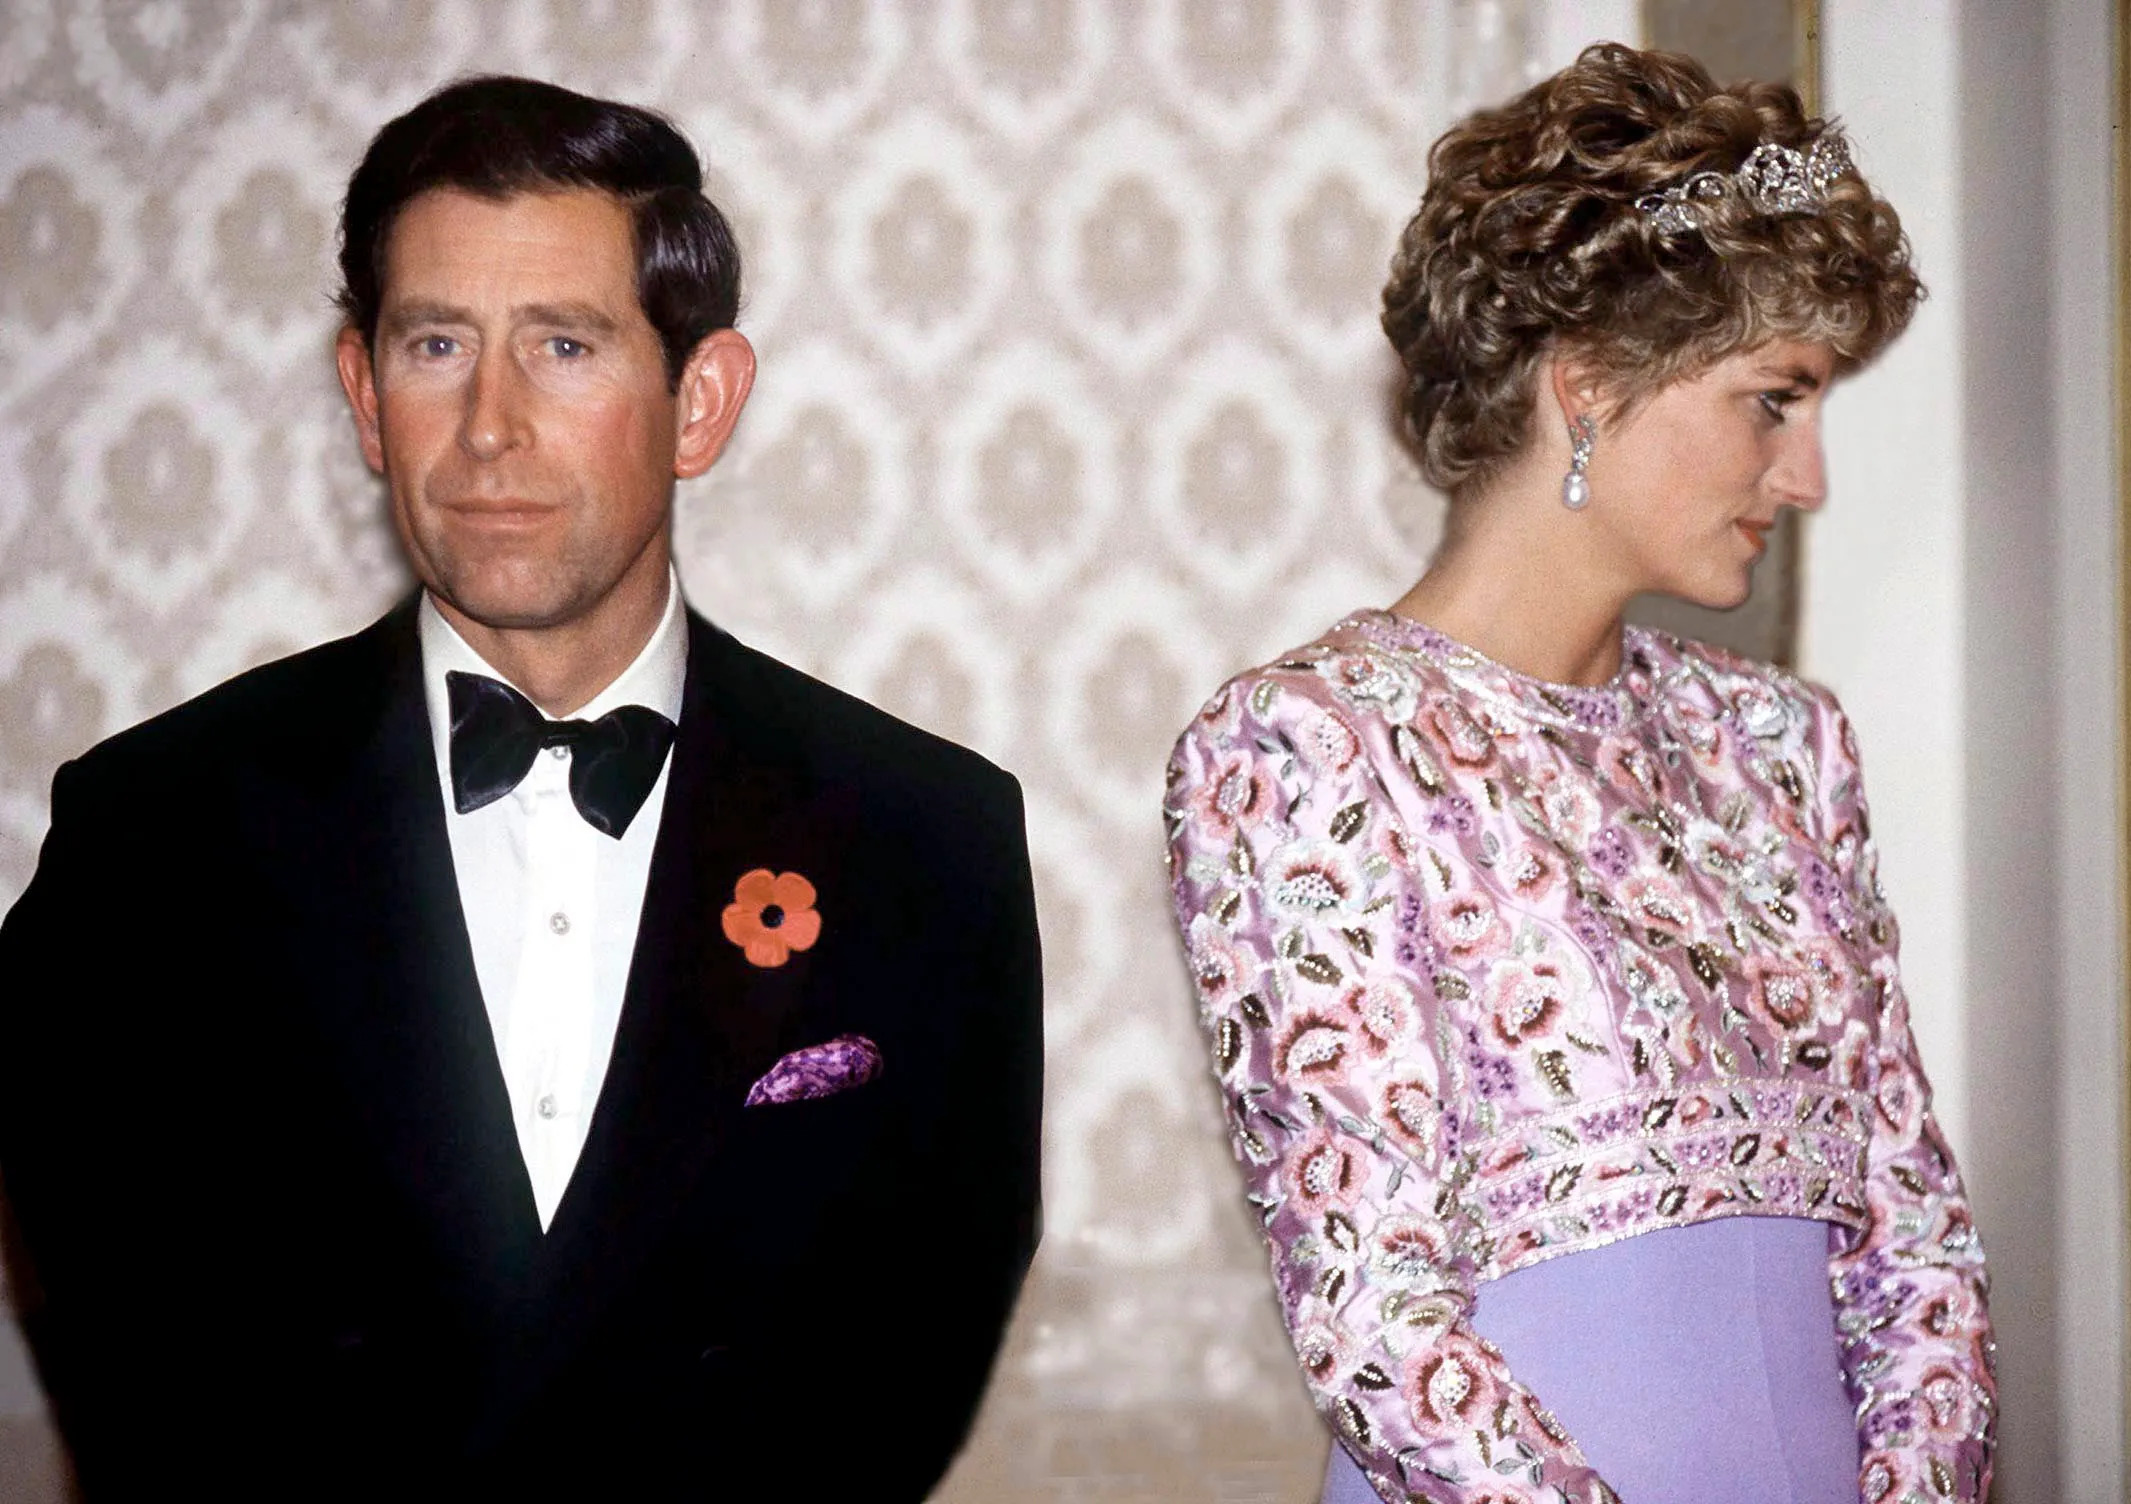 Prince Charles and Princess Diana marriage